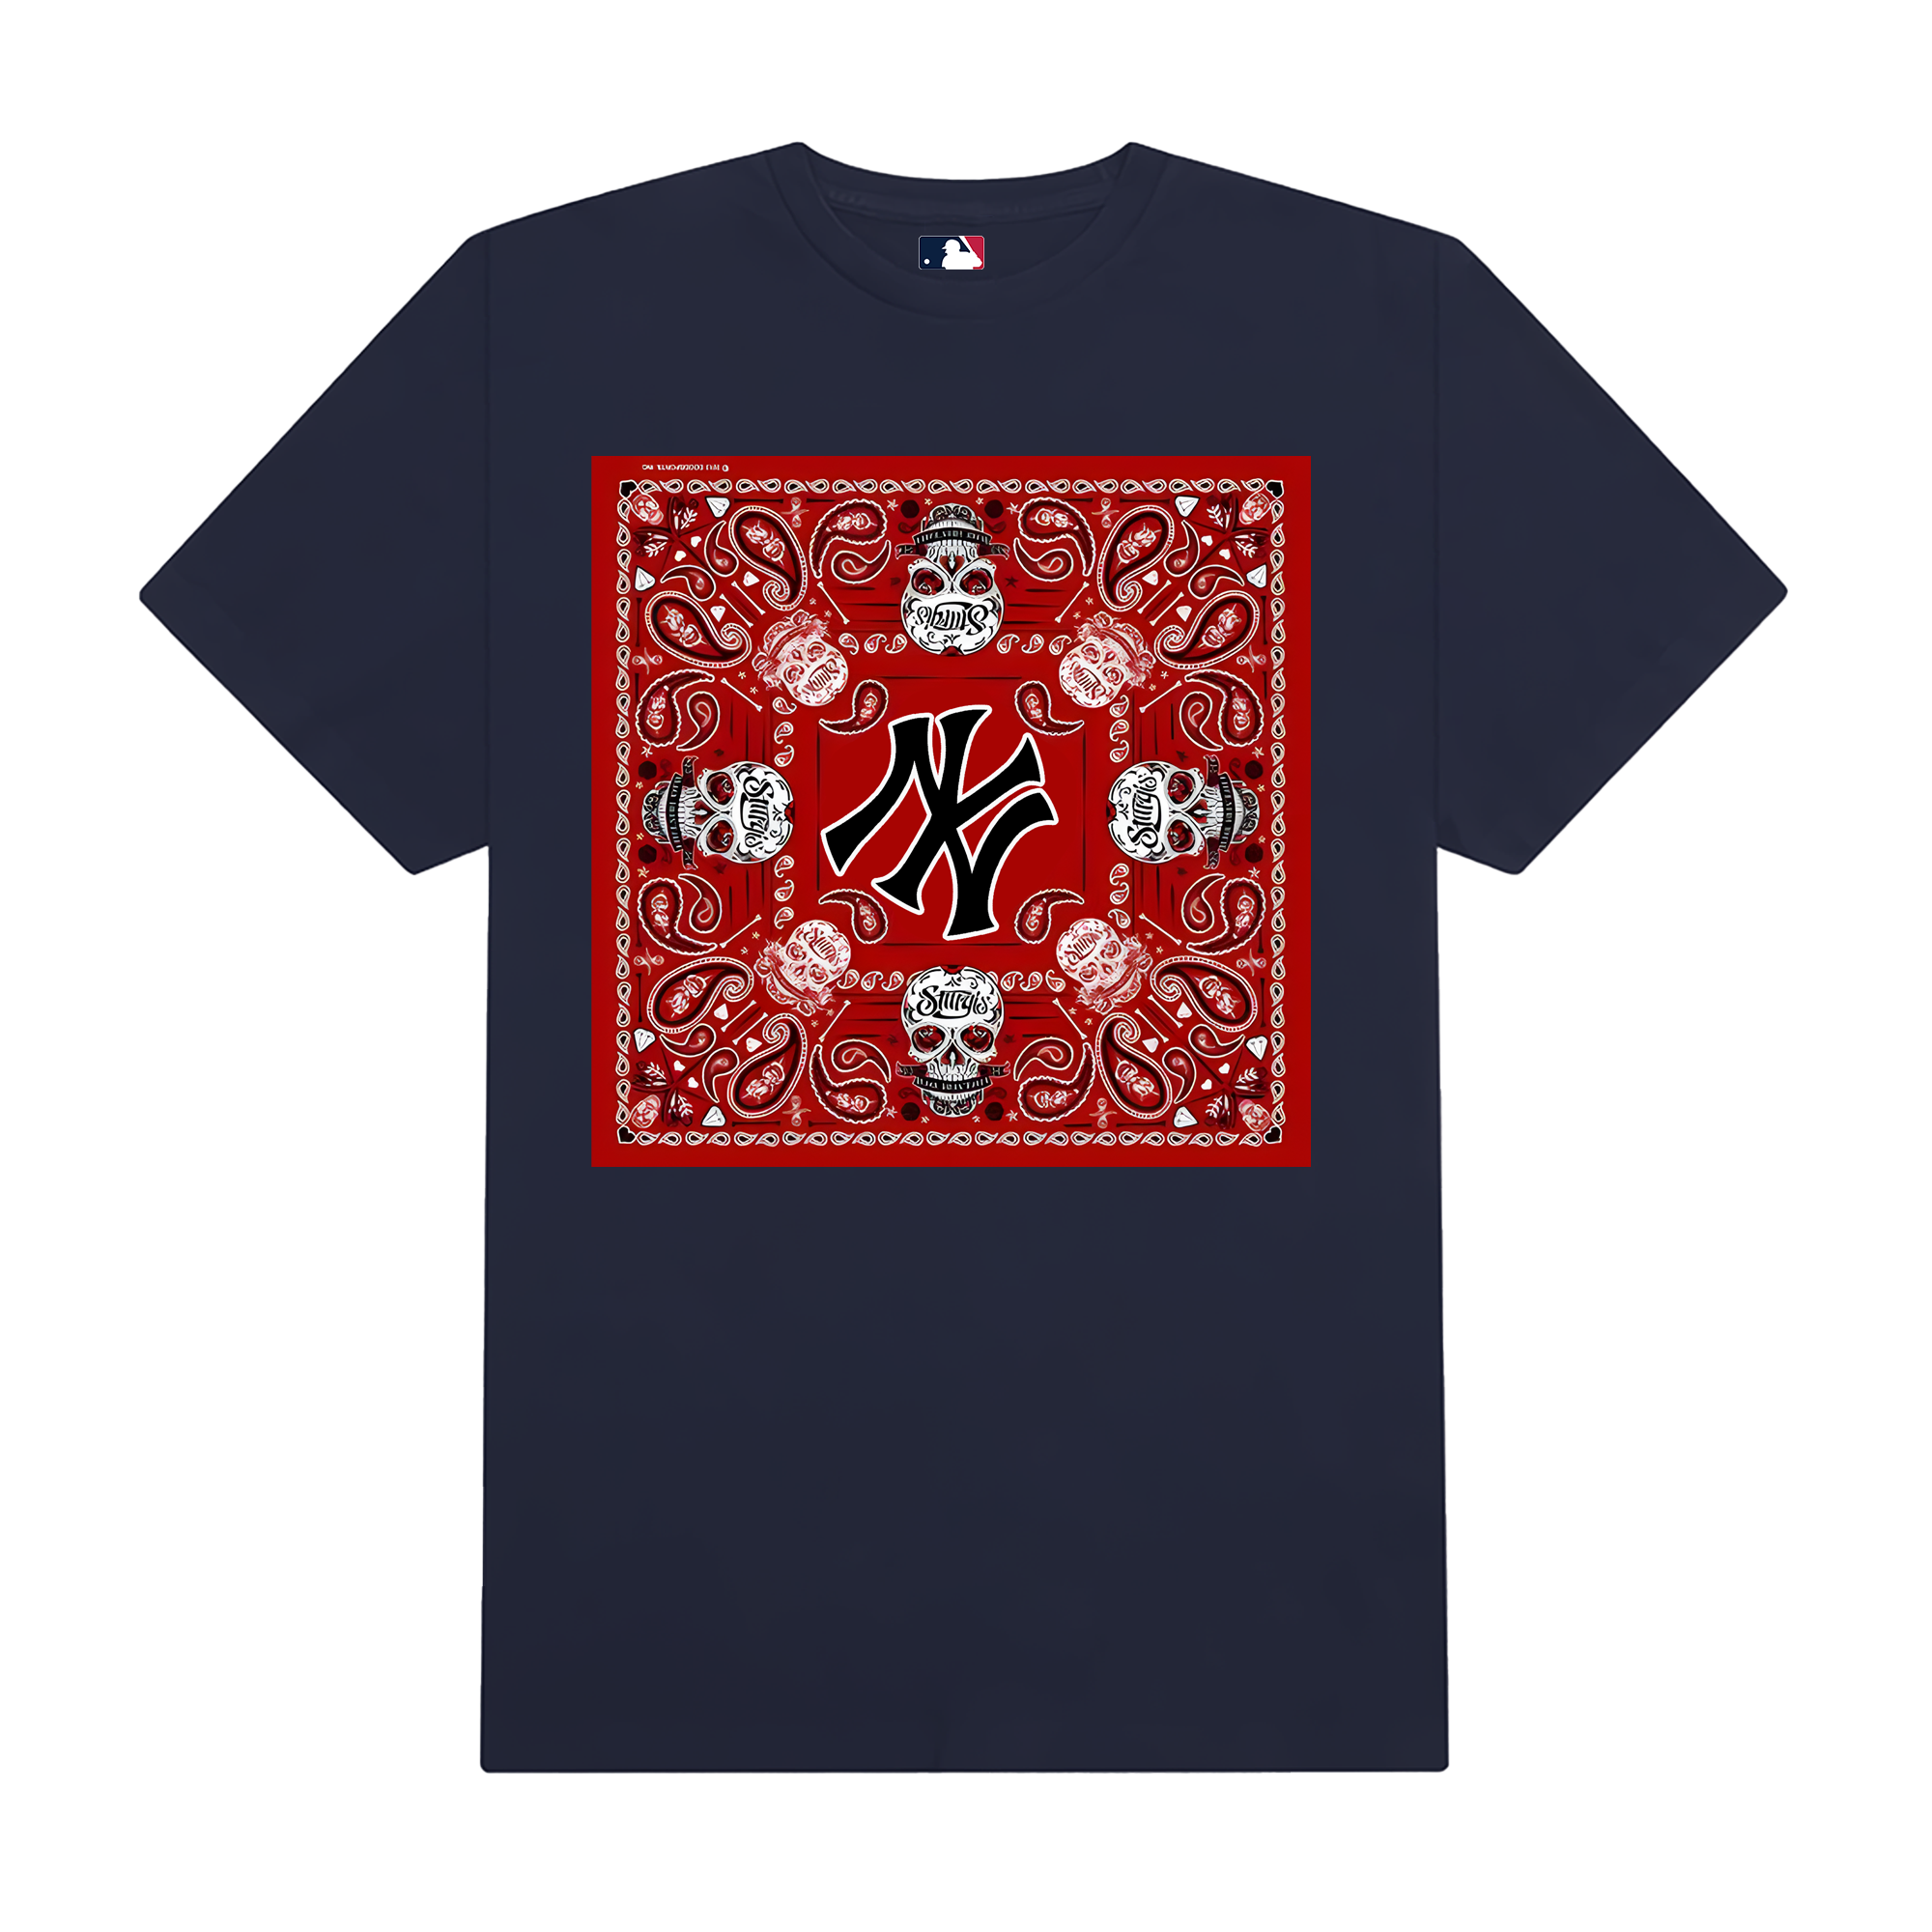 MLB Floral Red Bandana Skull T-Shirt